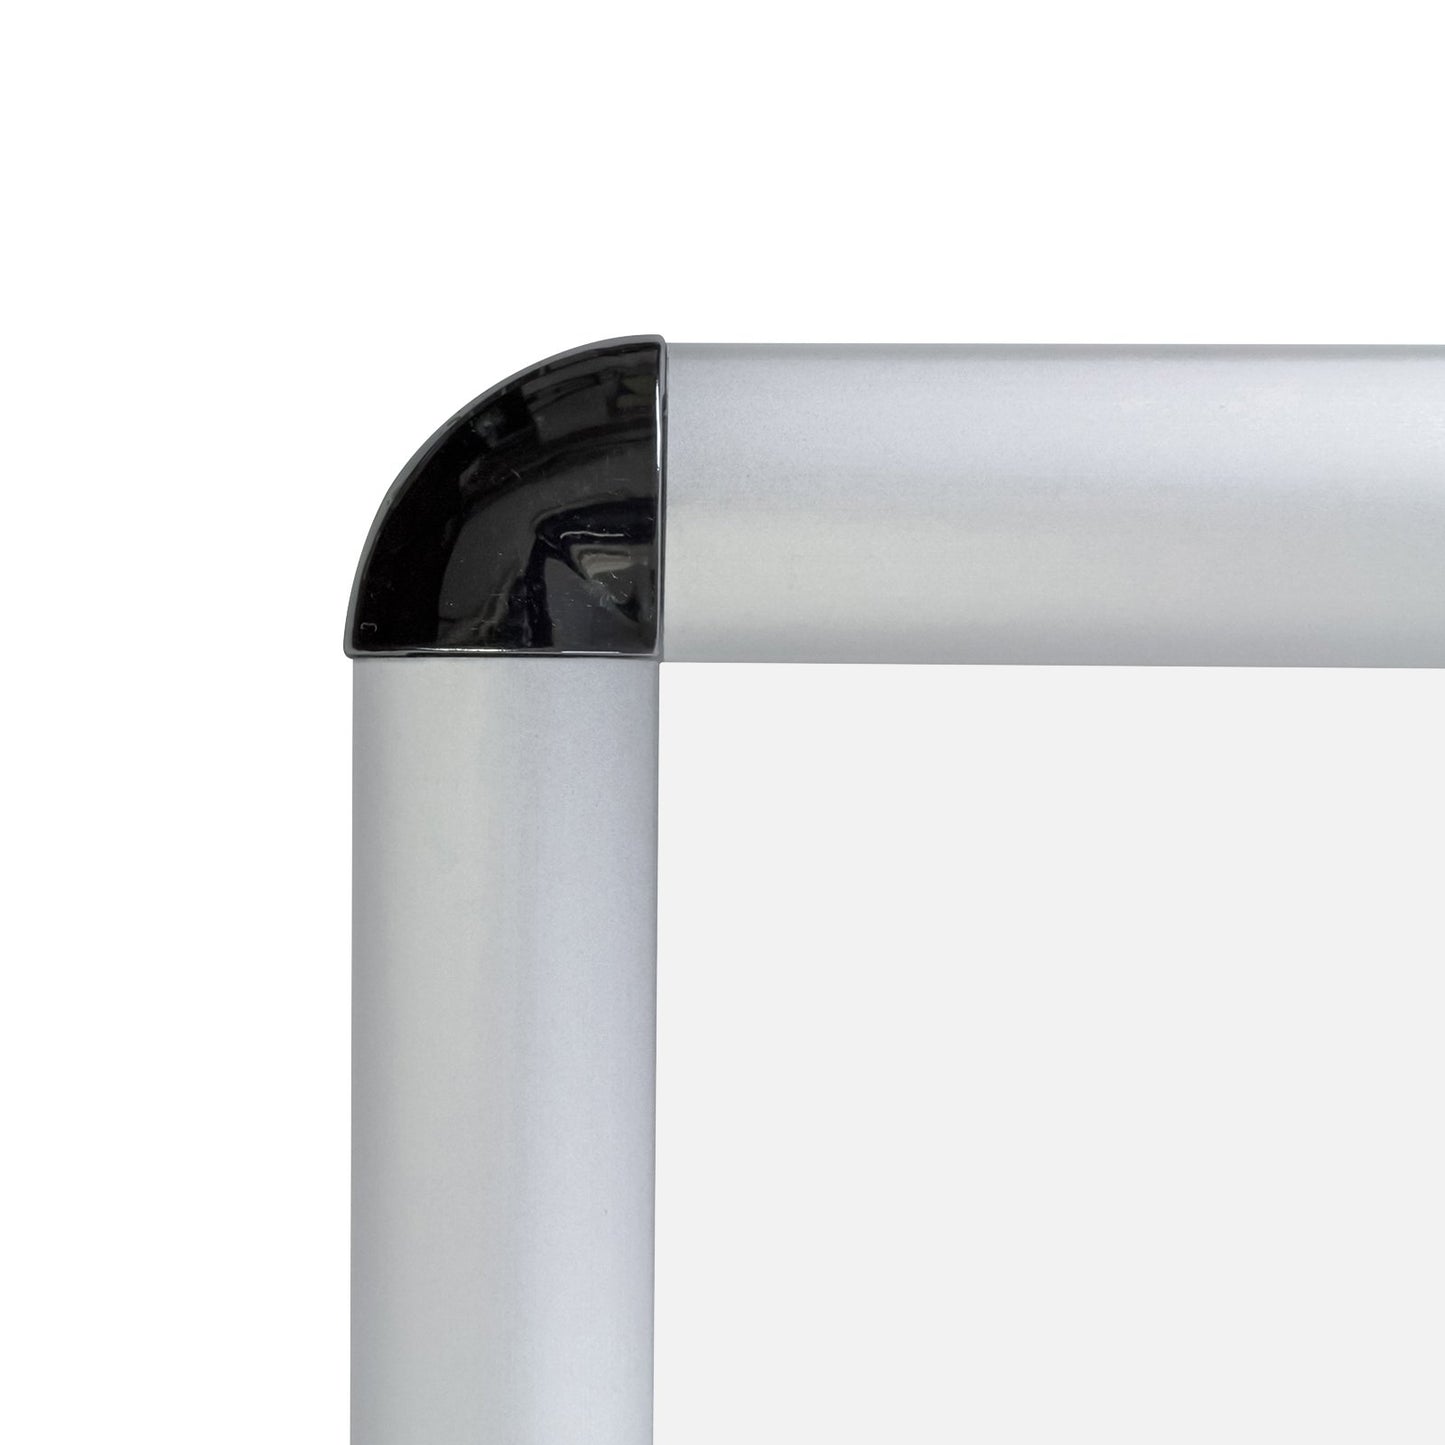 27.94 x 35.56 cm Silver Round-Cornered Snap Frame - 25MM Profile